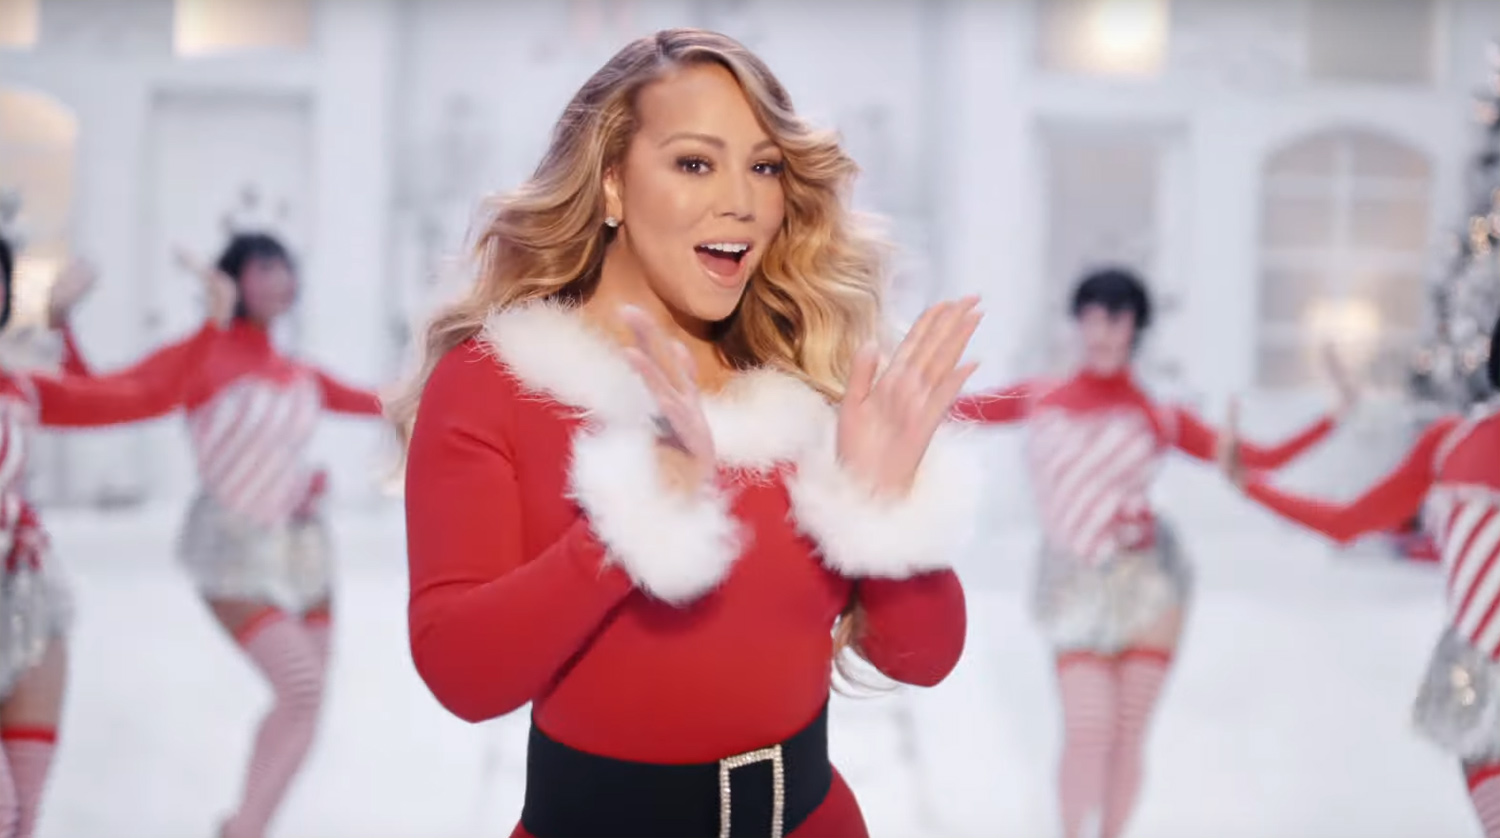 All I Want For Christmas Is...  миллионов: Мэрайю Кэри хотят засудить за известную песню